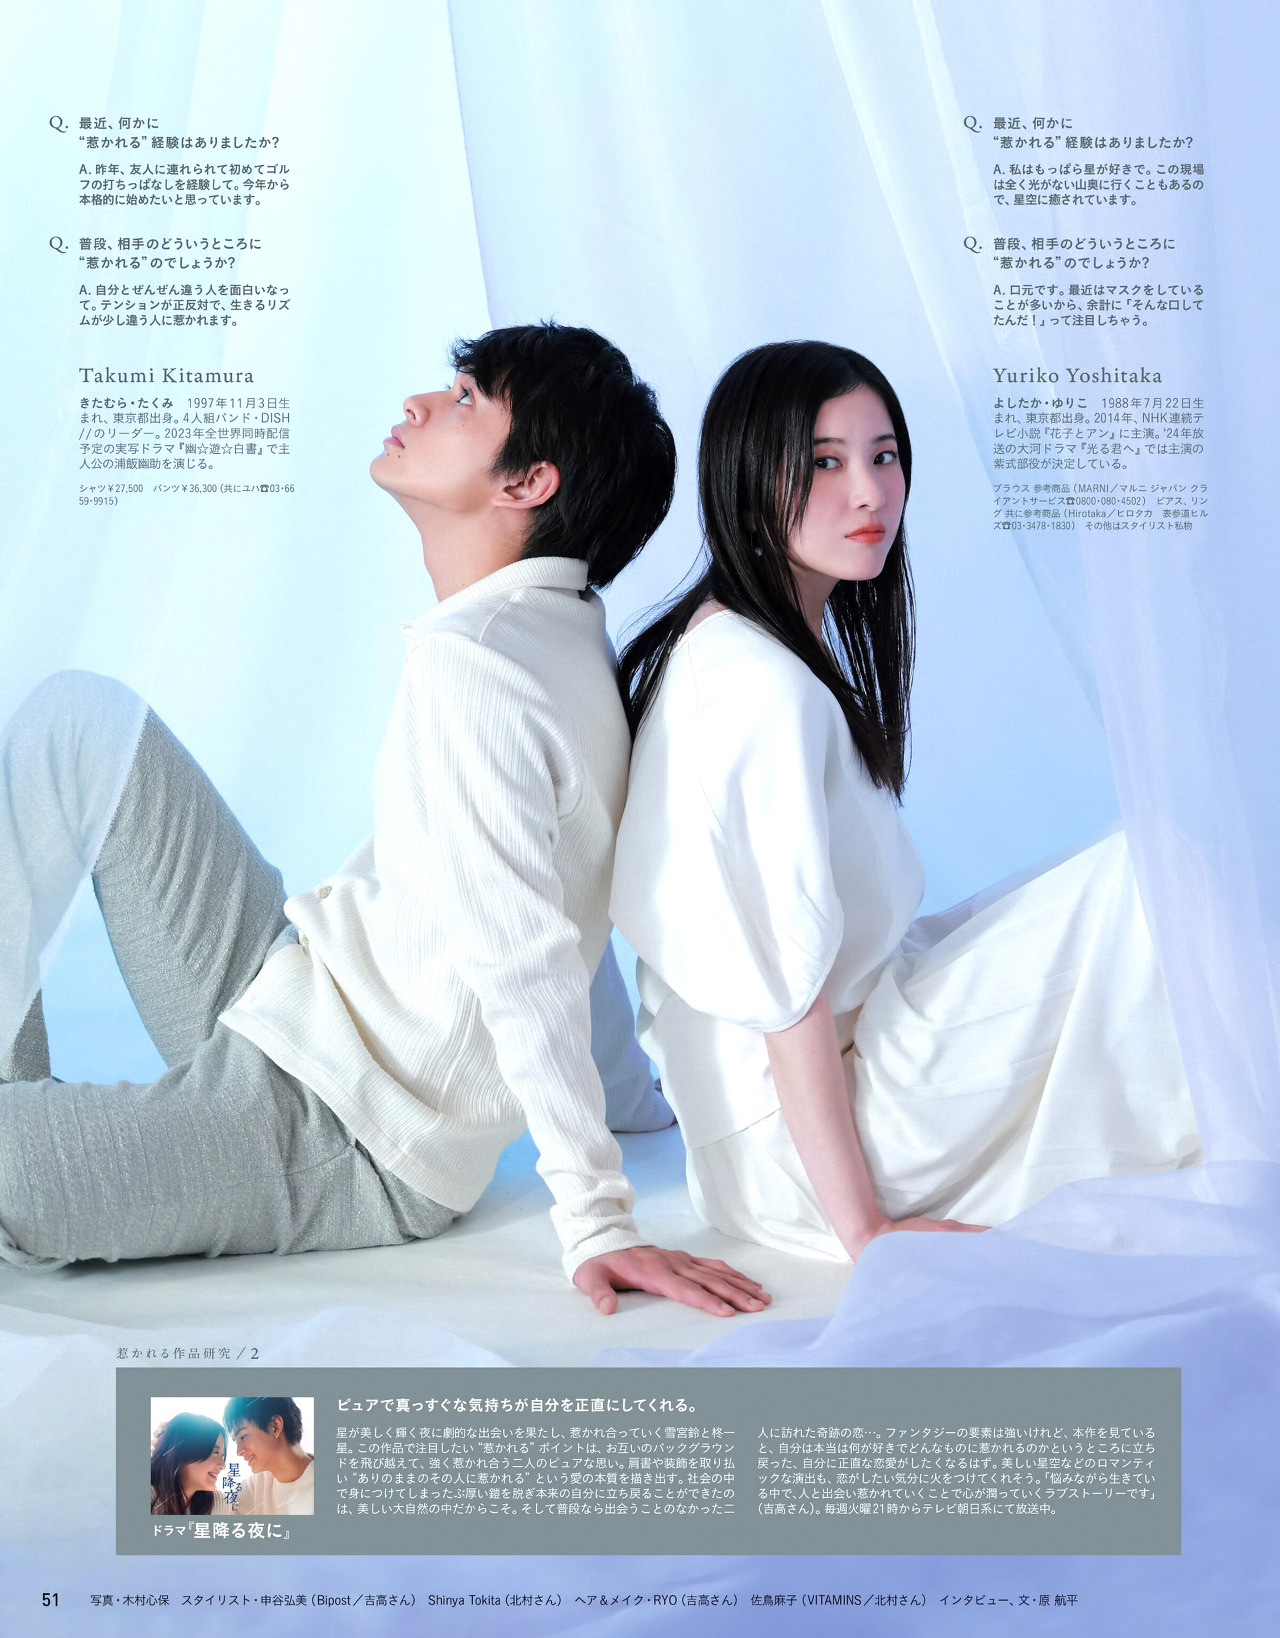 Yoshitaka Yuriko anan February 15, 23rd issue